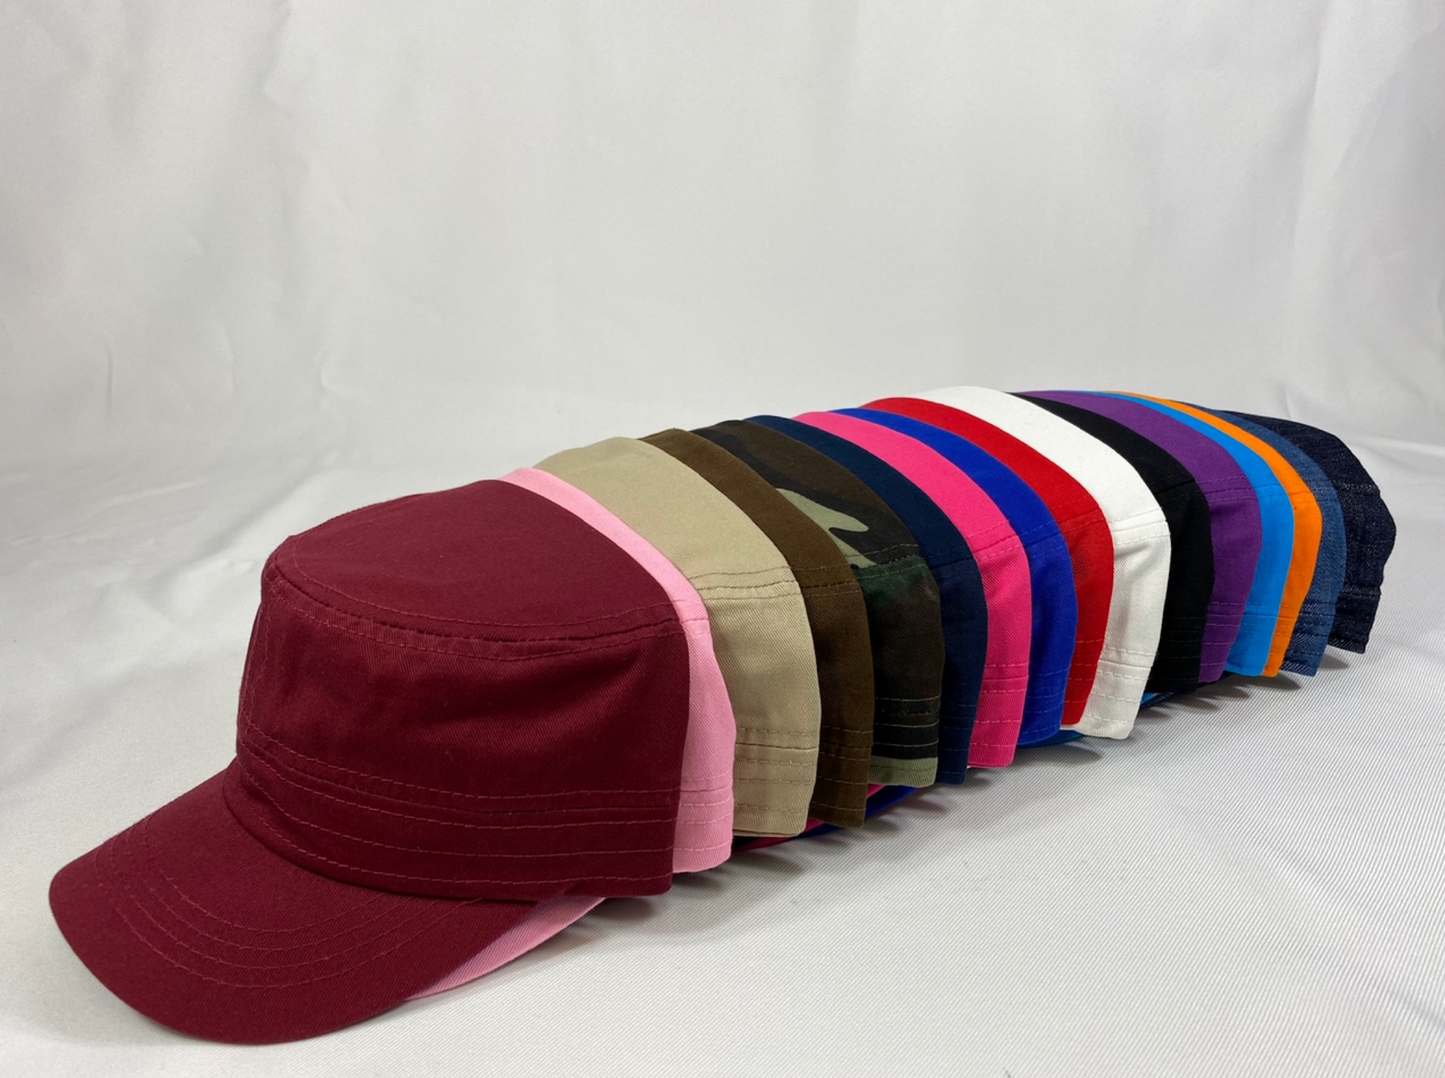 Basketball Rhinestone Hat, Basketball Hat, Rhinestone Hat, Embroidered Hats, Rhinestone Cap, Hats, Caps